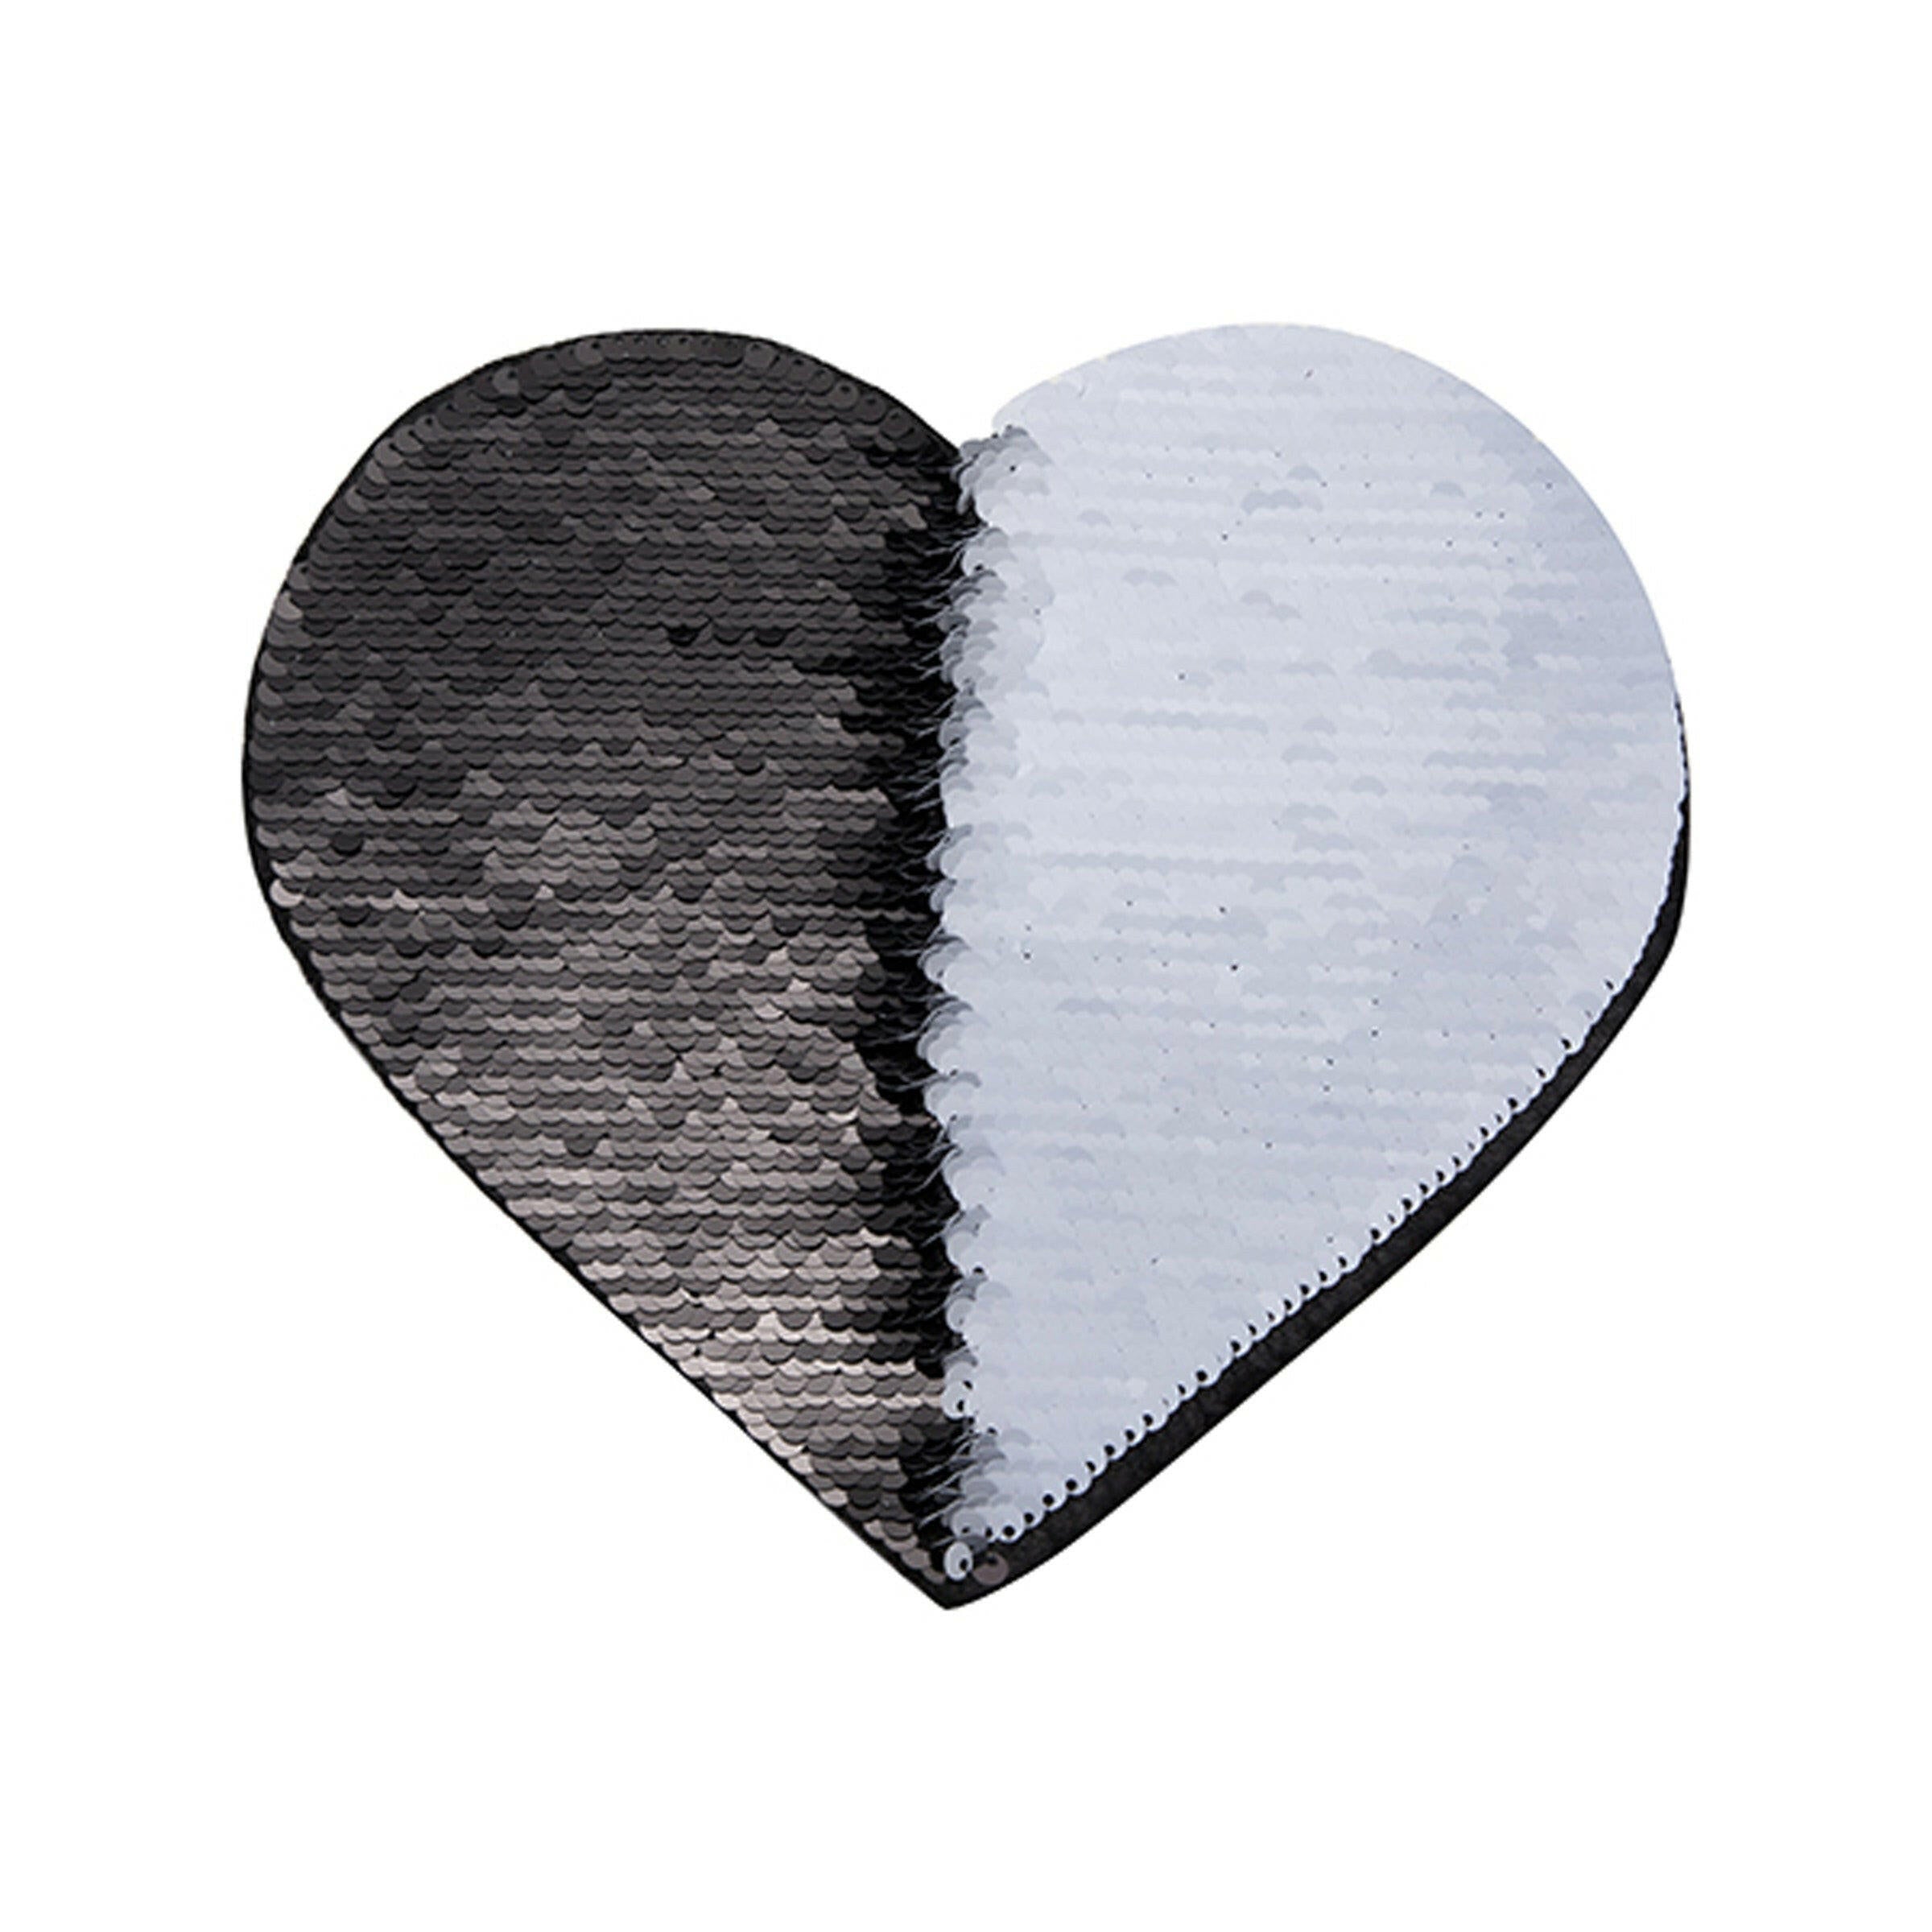 Black Heart Sequin Sublimation Patches - 2 Pack.